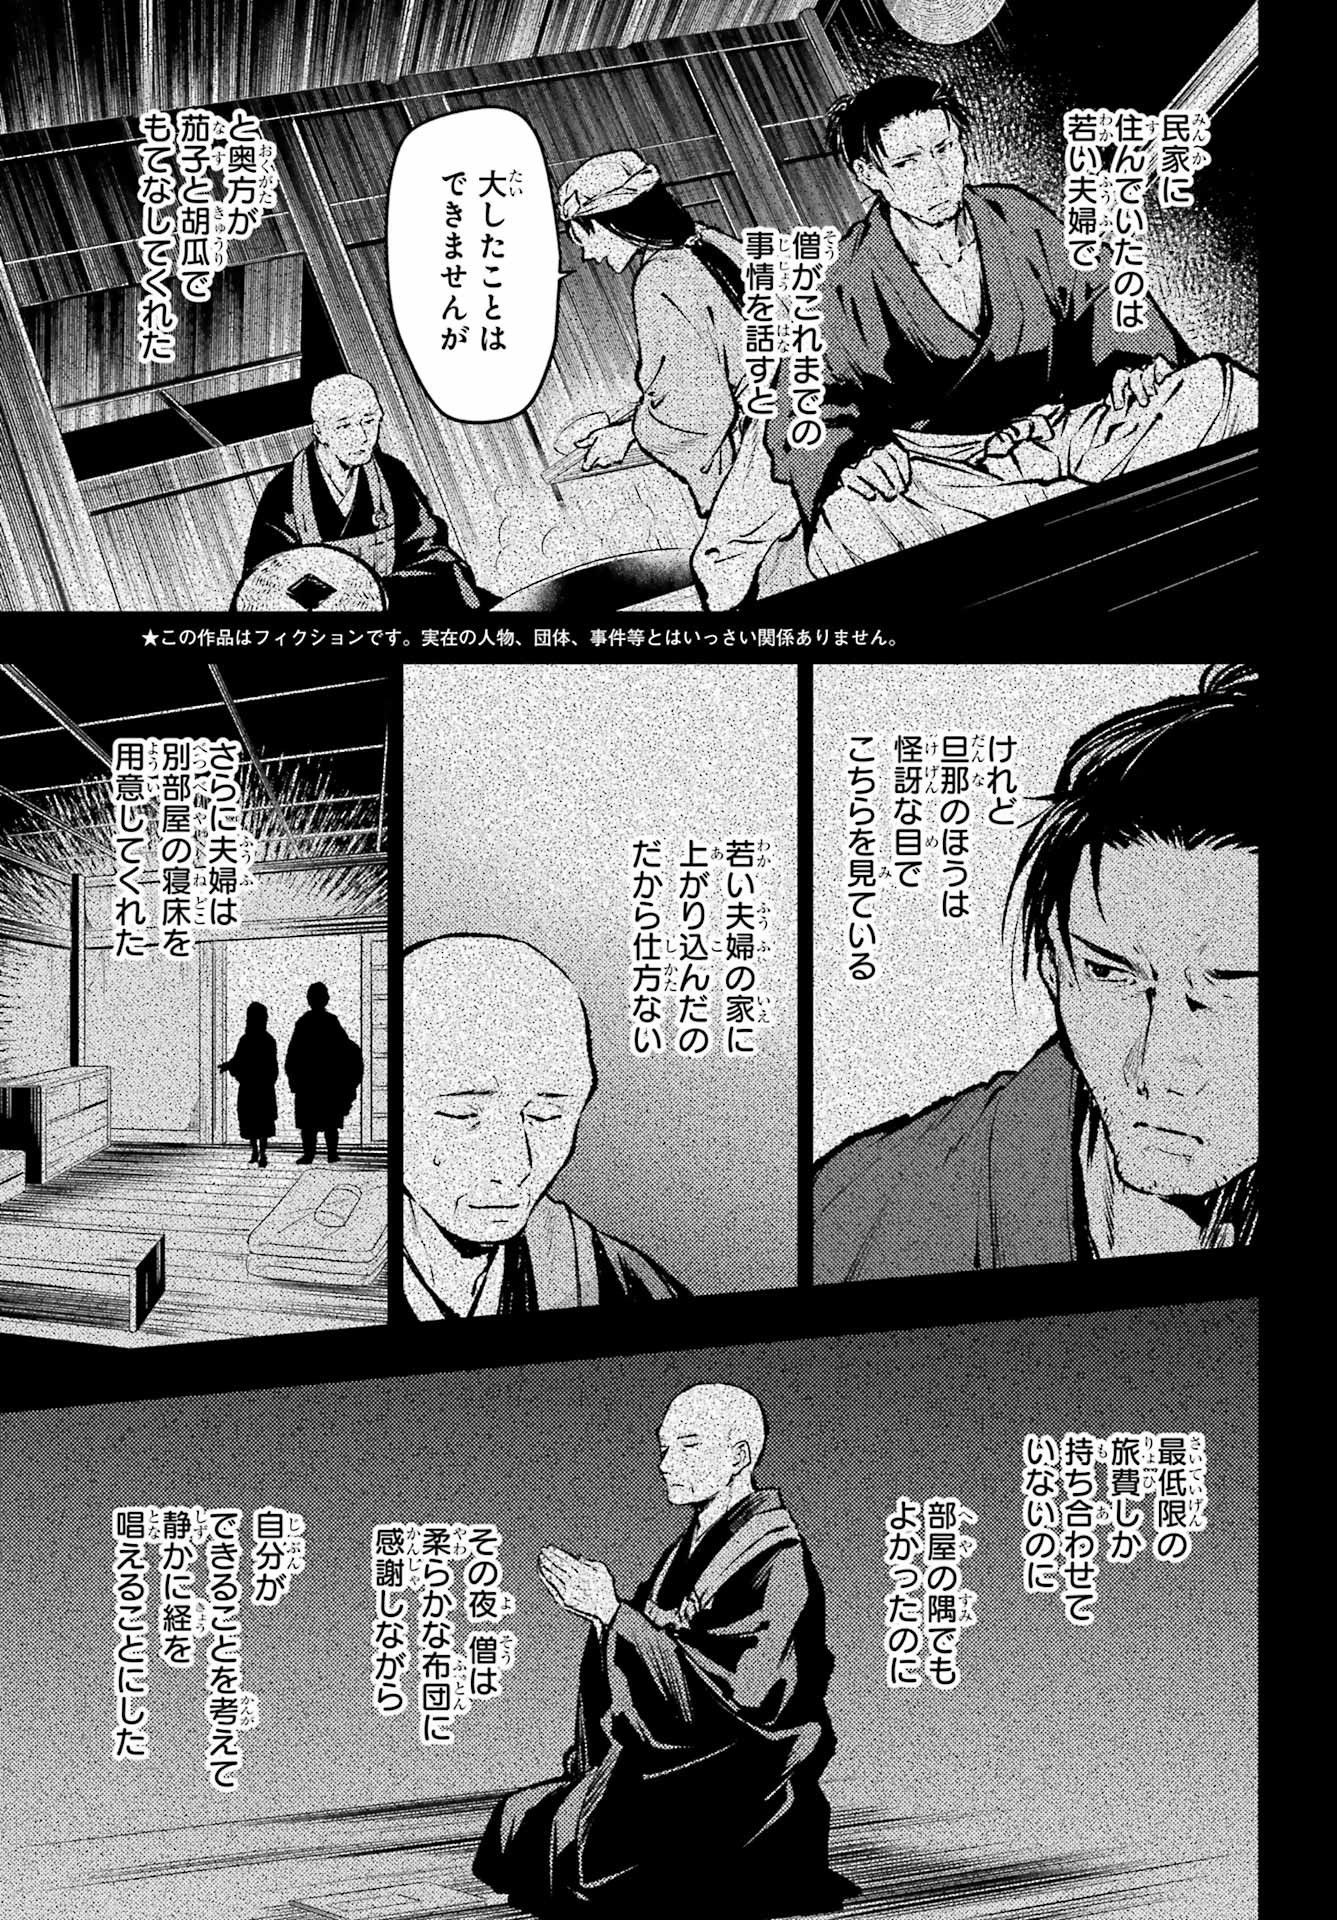 Kusuriya no Hitorigoto - Chapter 59-2 - Page 2